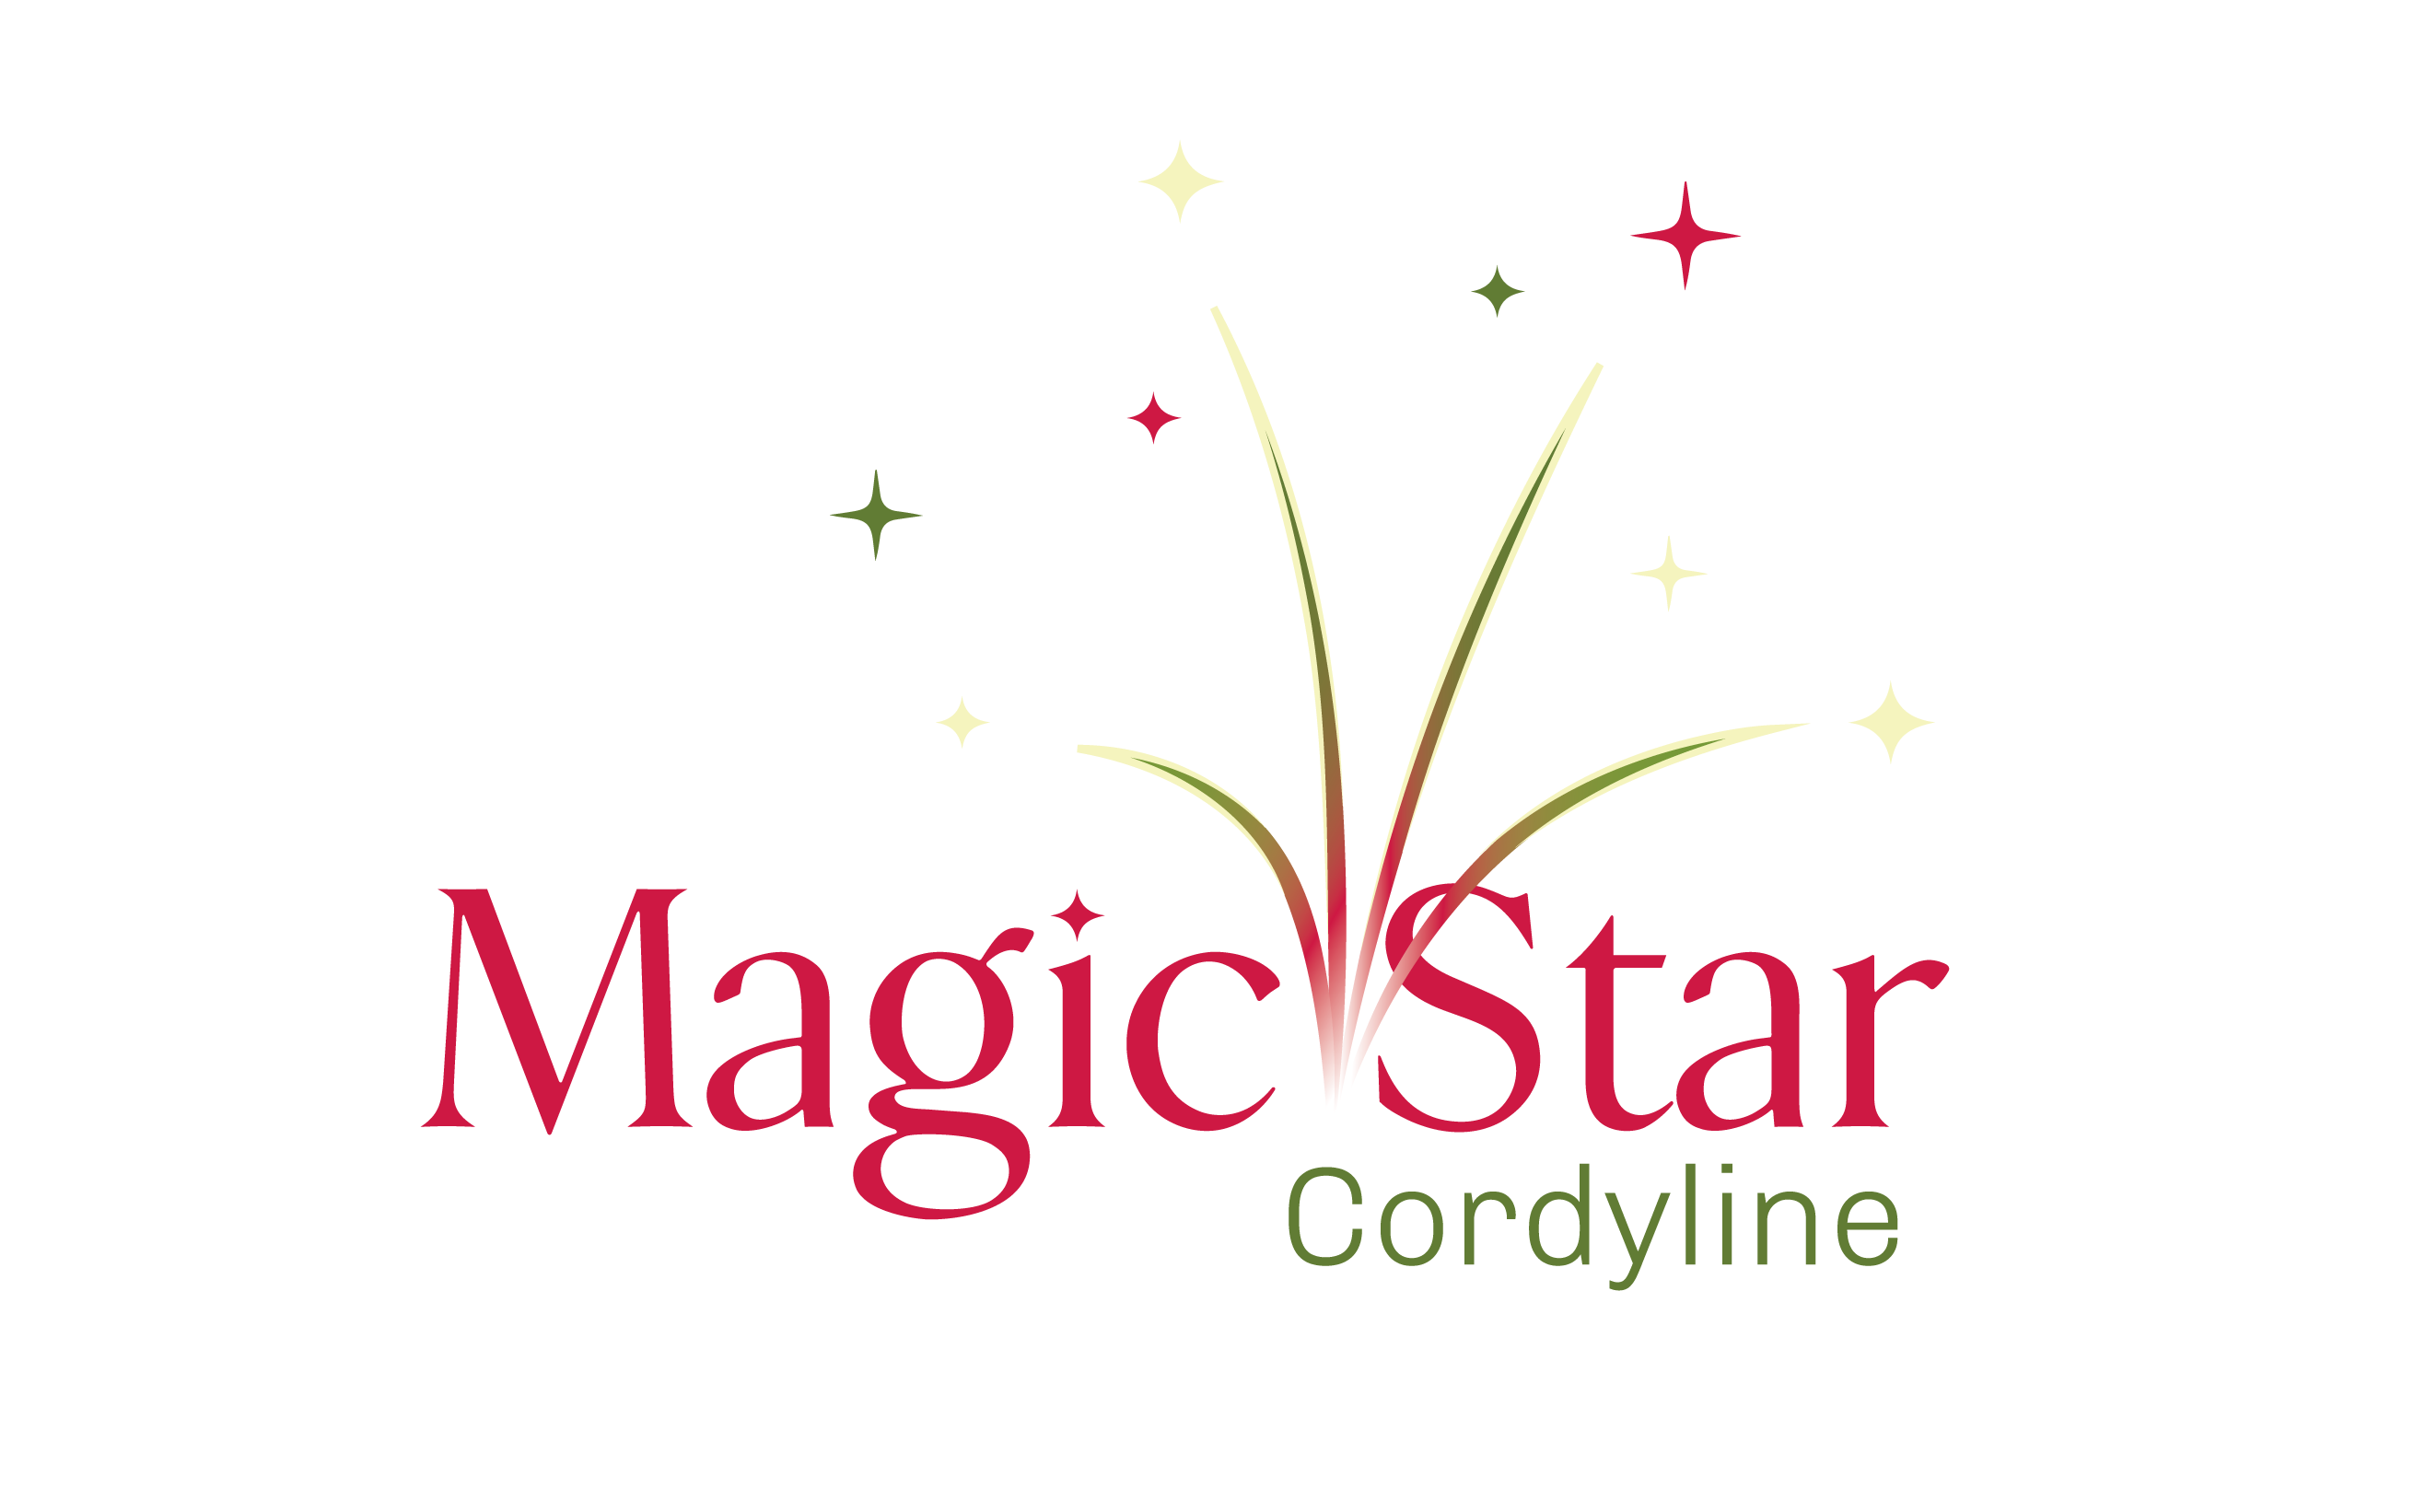 logo-cordyline-magic-star-tus020-ppaf